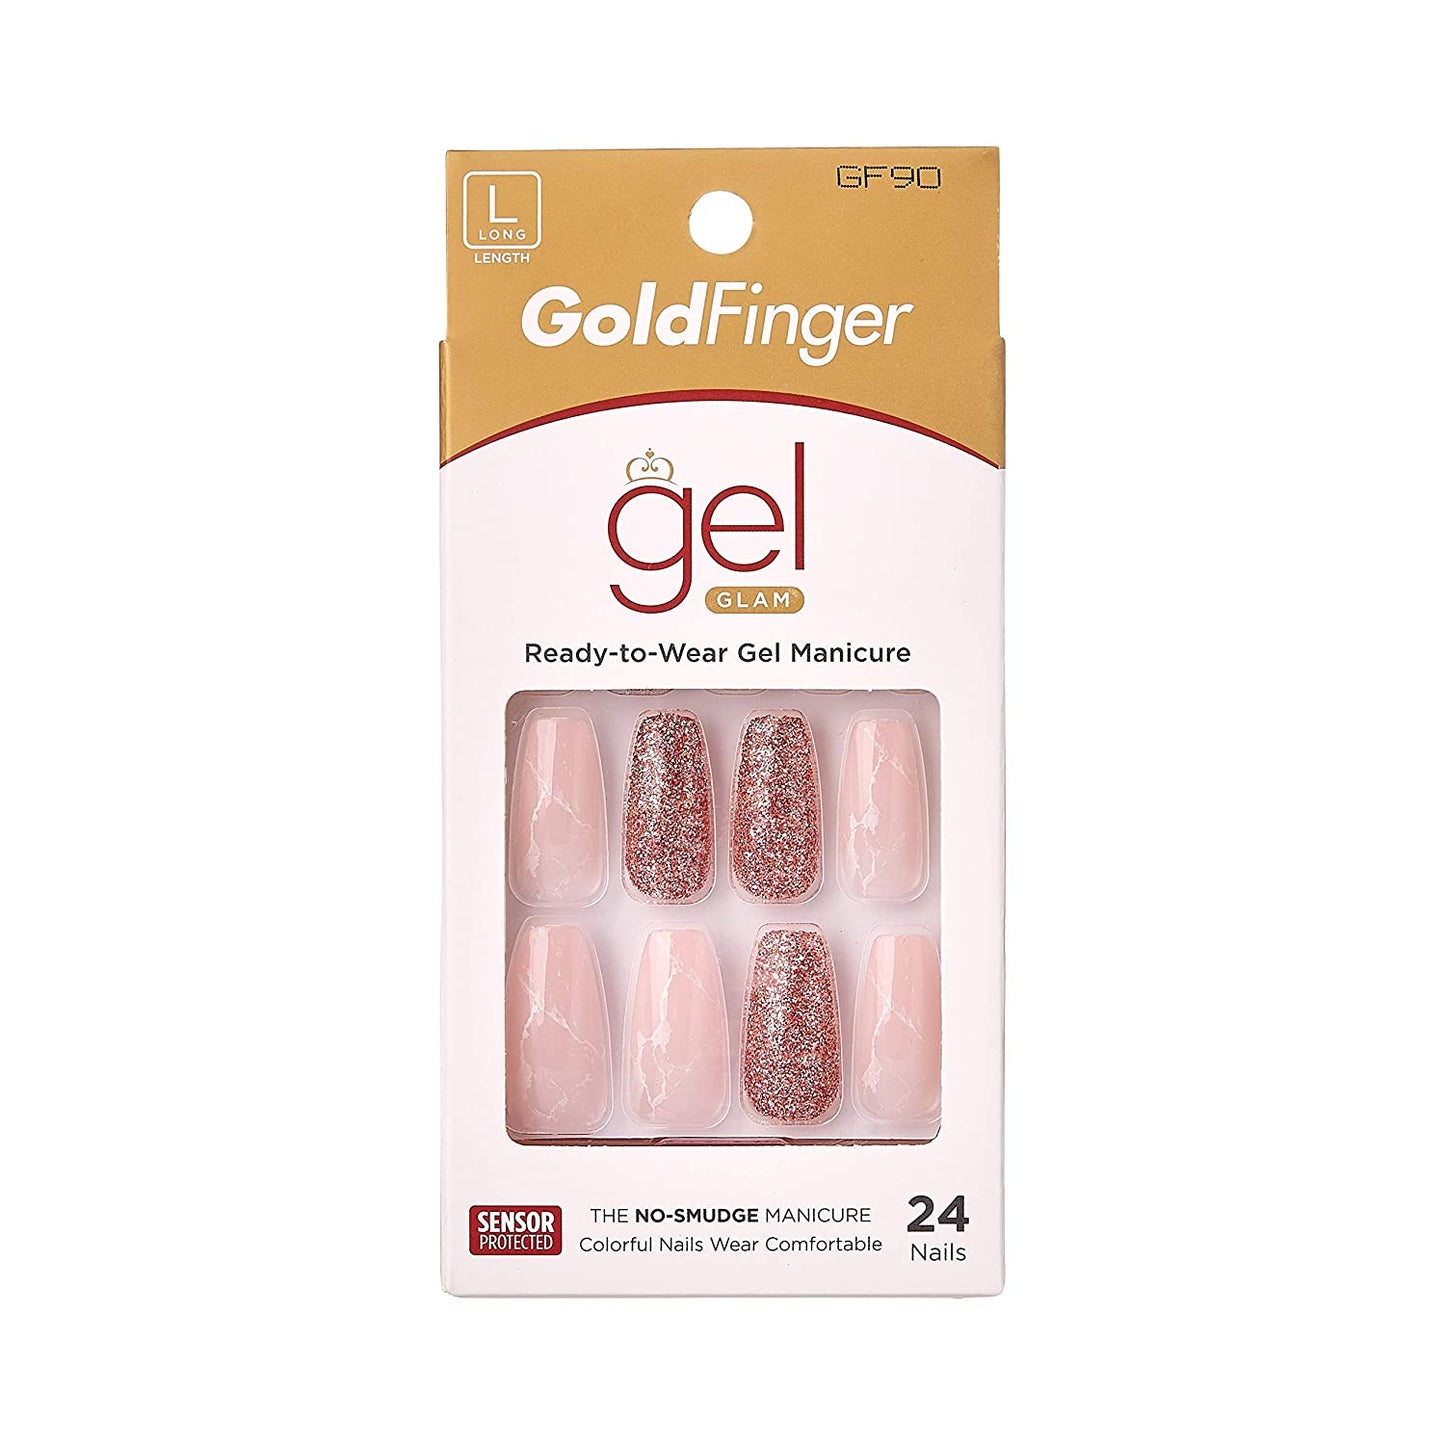 KISS GoldFinger Gel Glam Manicure Nails GF90